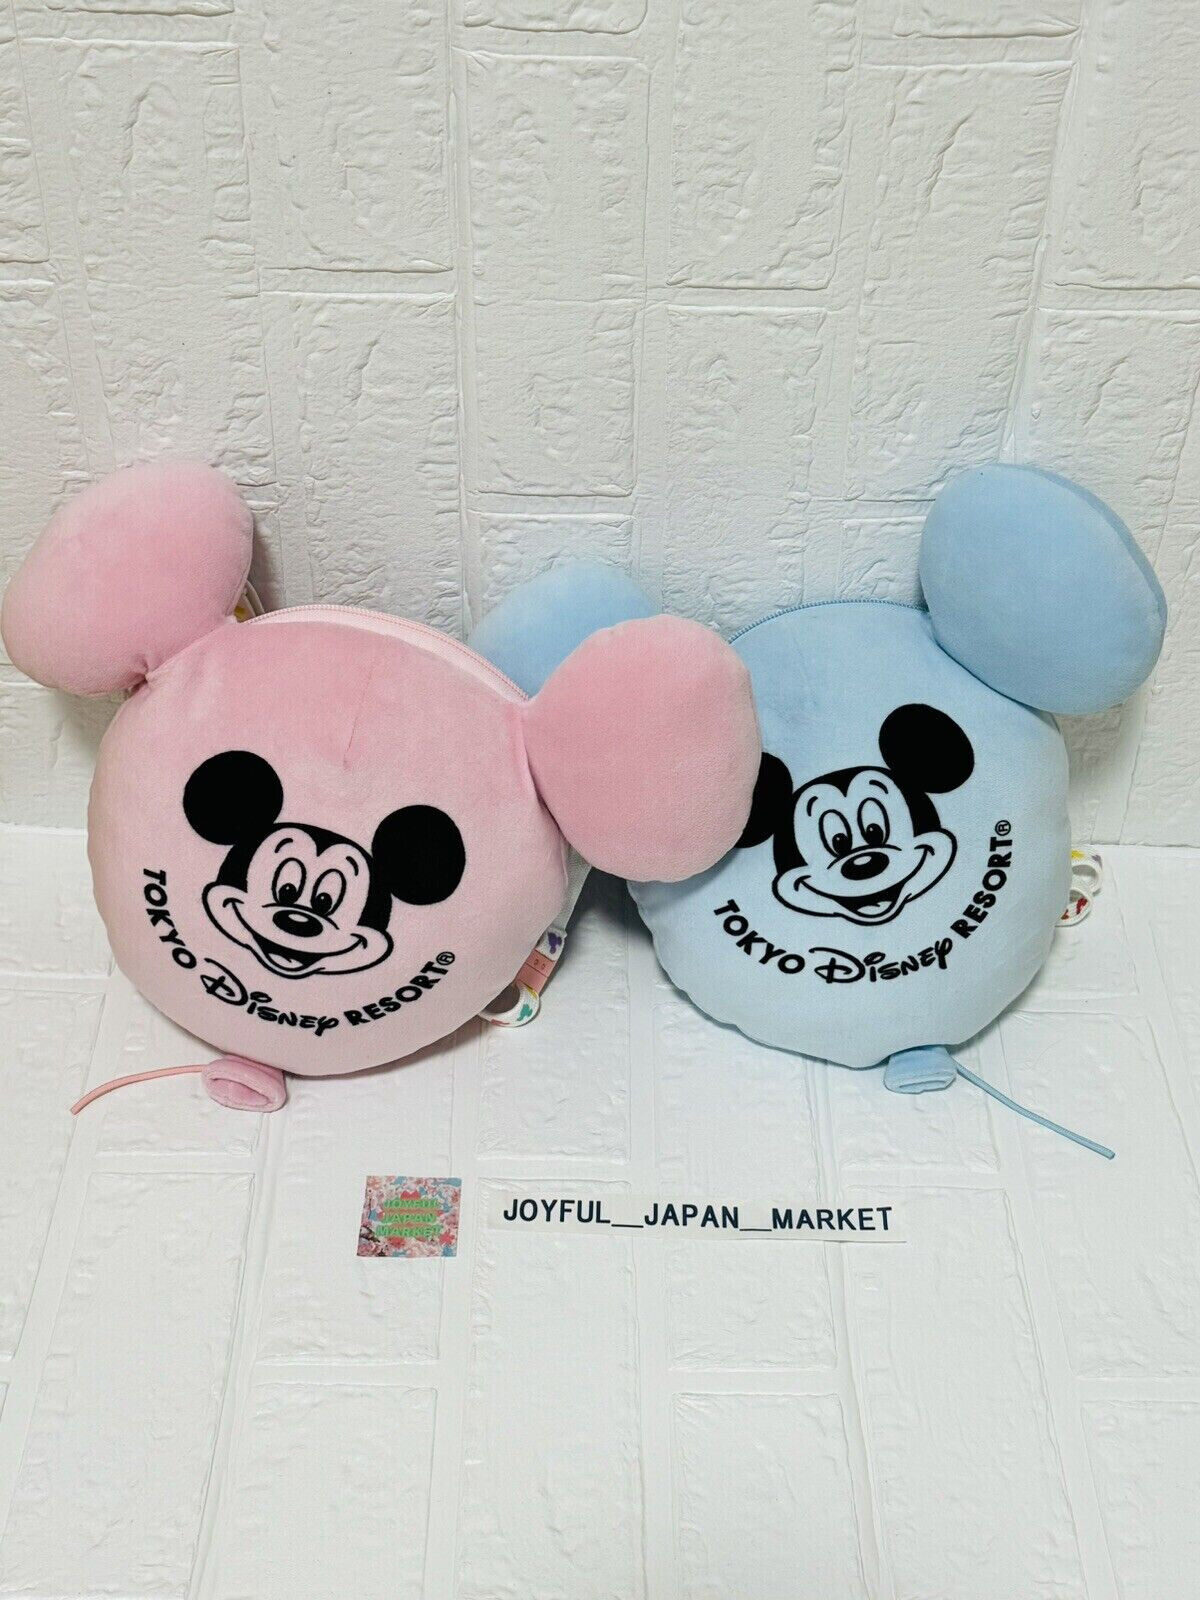 Tokyo Disney Mickey Balloon Shoulder Bag Pochette Pouch pink & Blue Set Japan